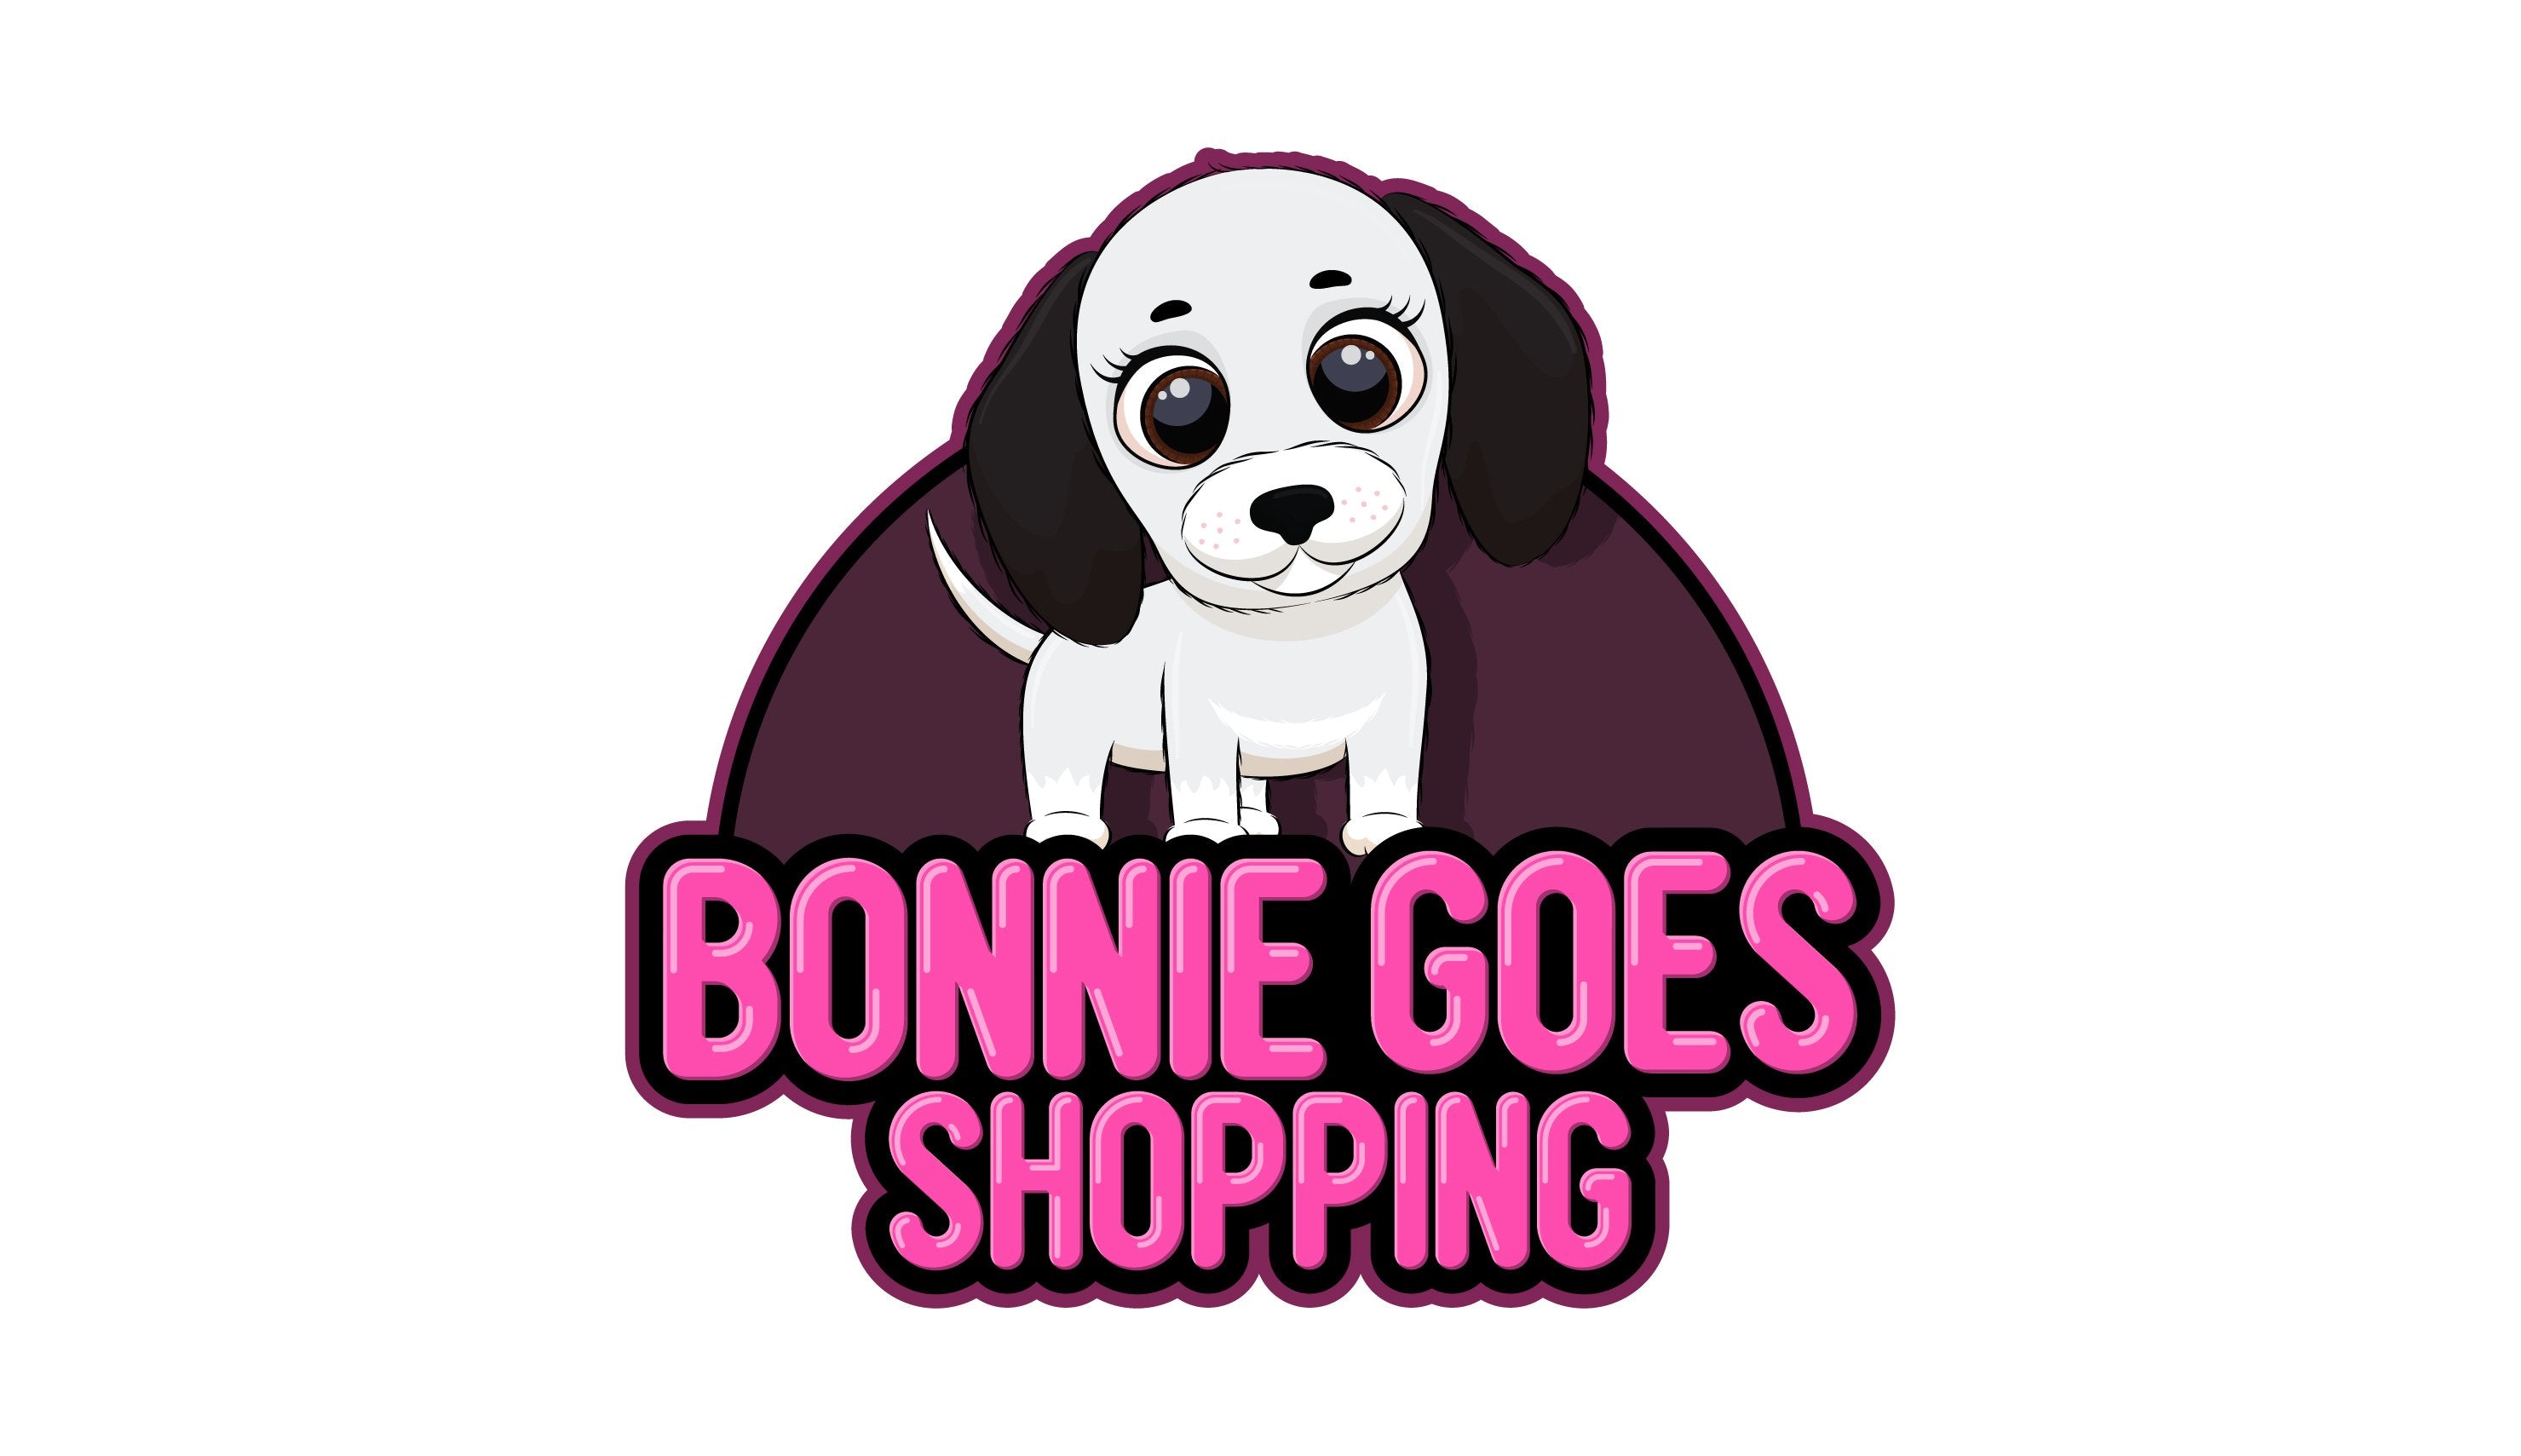 Bonnie goes shopping